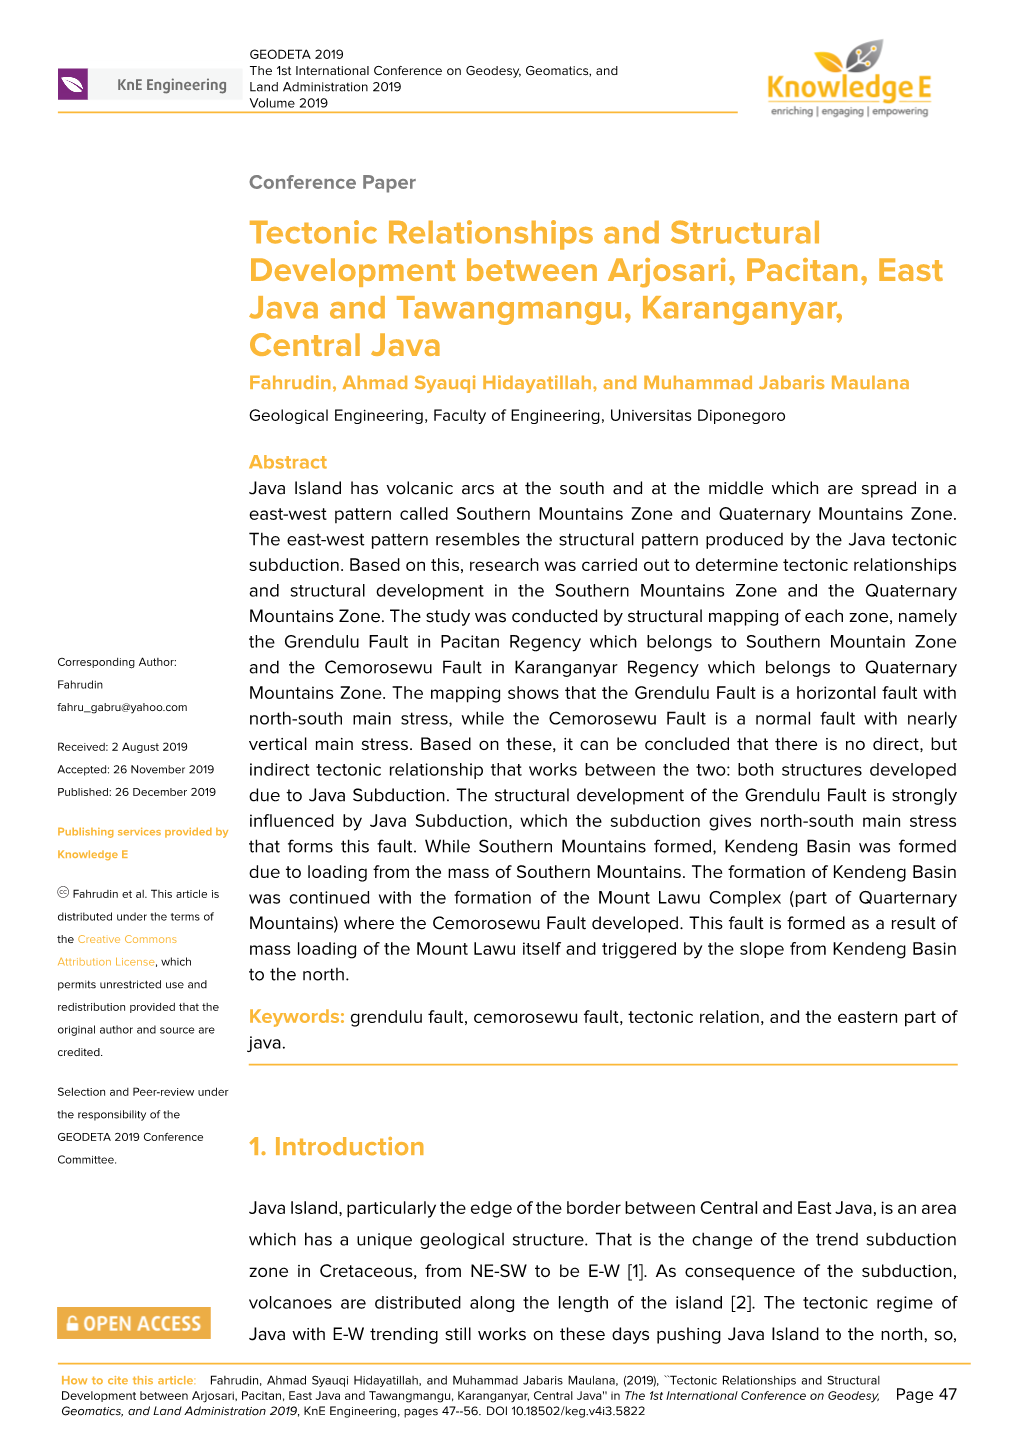 Tectonic Relationships and Structural Development Between Arjosari, Pacitan, East Java and Tawangmangu, Karanganyar, Central